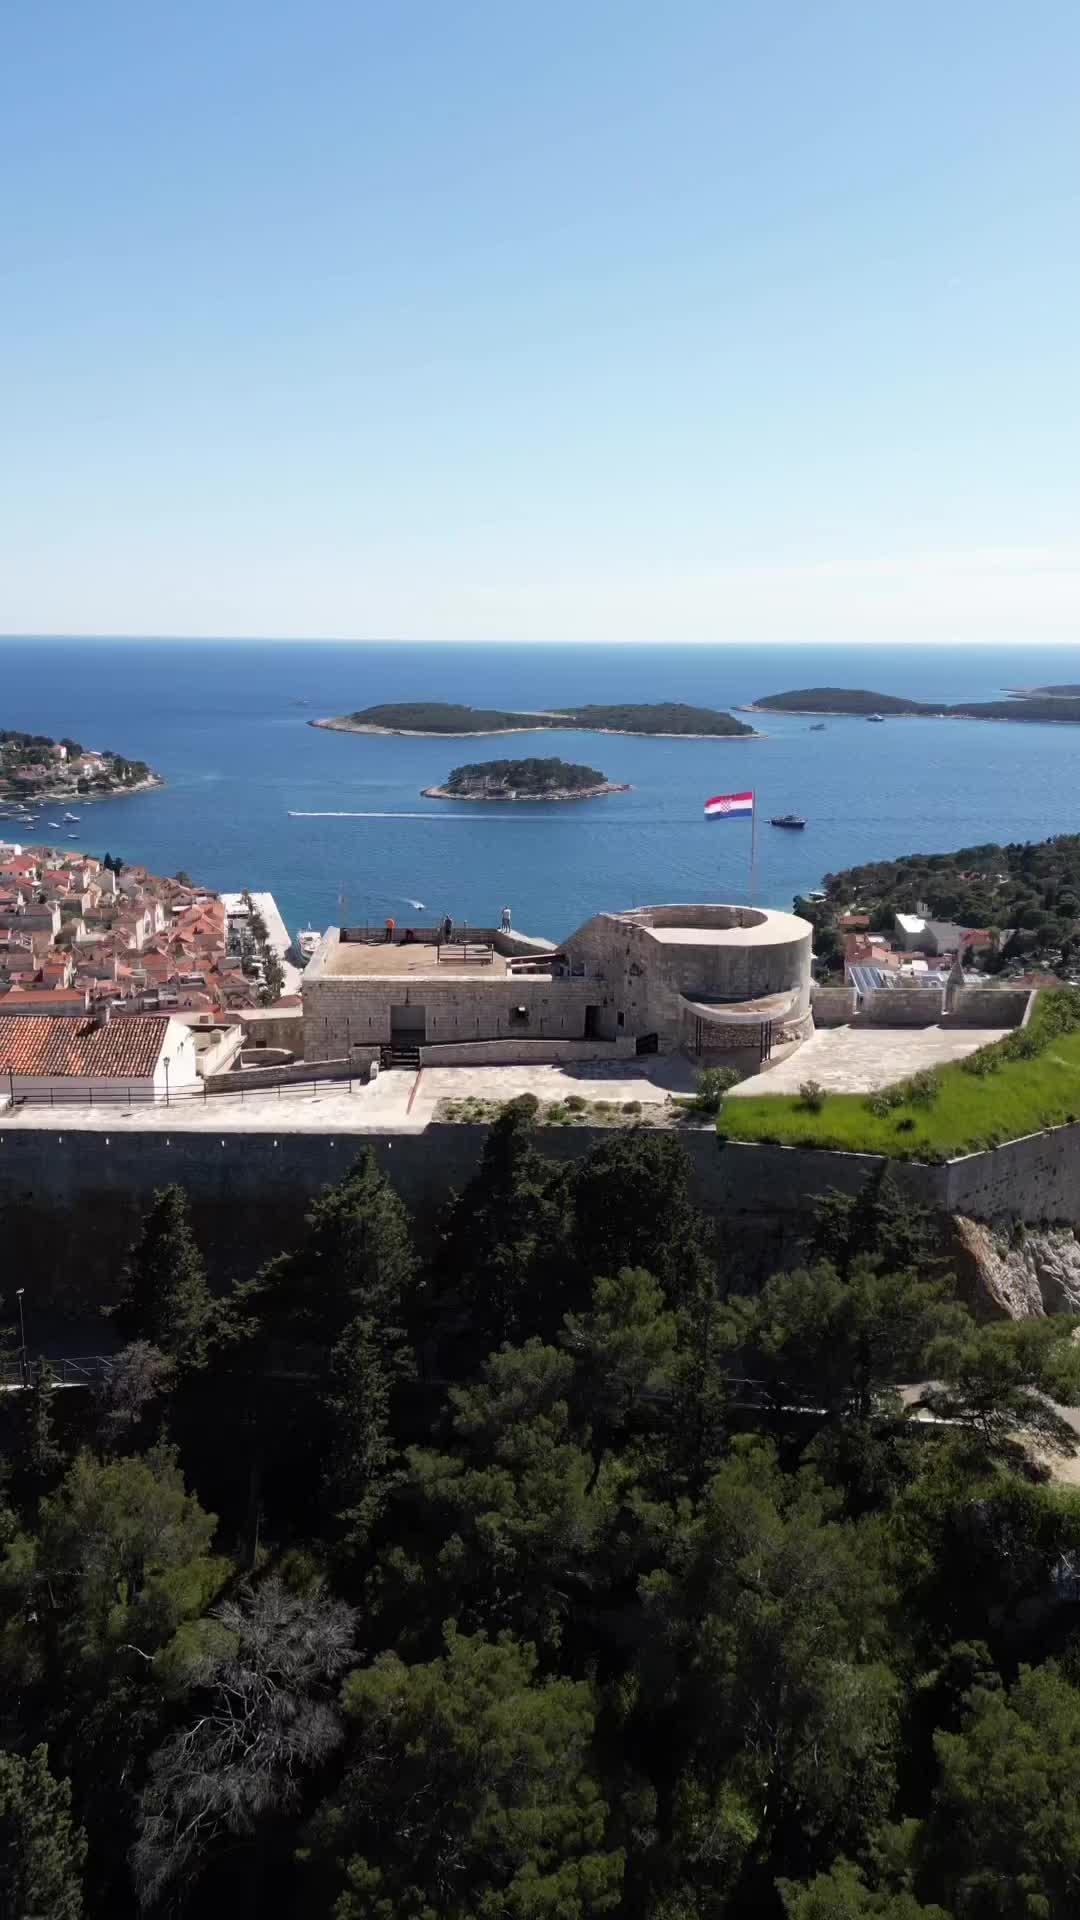 #castles #schloss #croatia #croatiatravel #croatianislands #croatian #jadranskomore #jadran #adriatico #adriaticsea #croazia #croatiancoast #croatiatrip #drohnen #dronefly #droneofficial #dronevideos